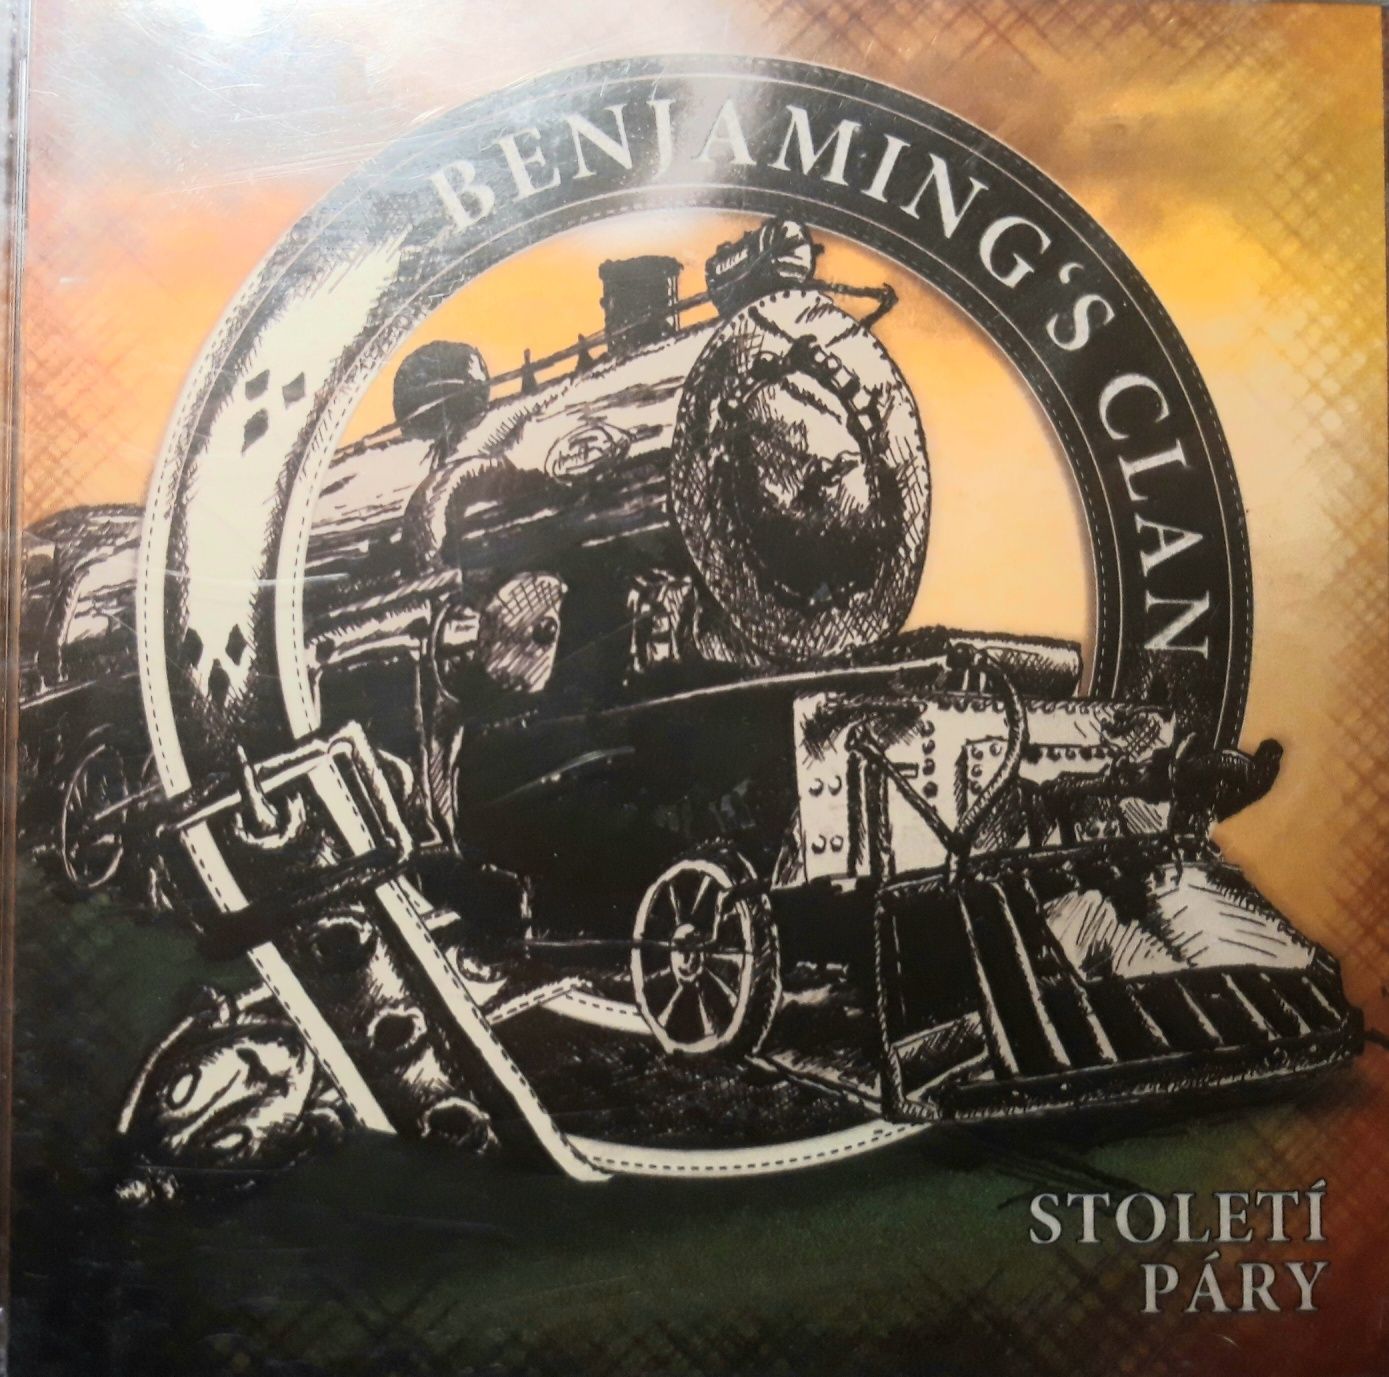 Benjaming's Clan – Stoleti Pary (CD, 2013, FOLIA)